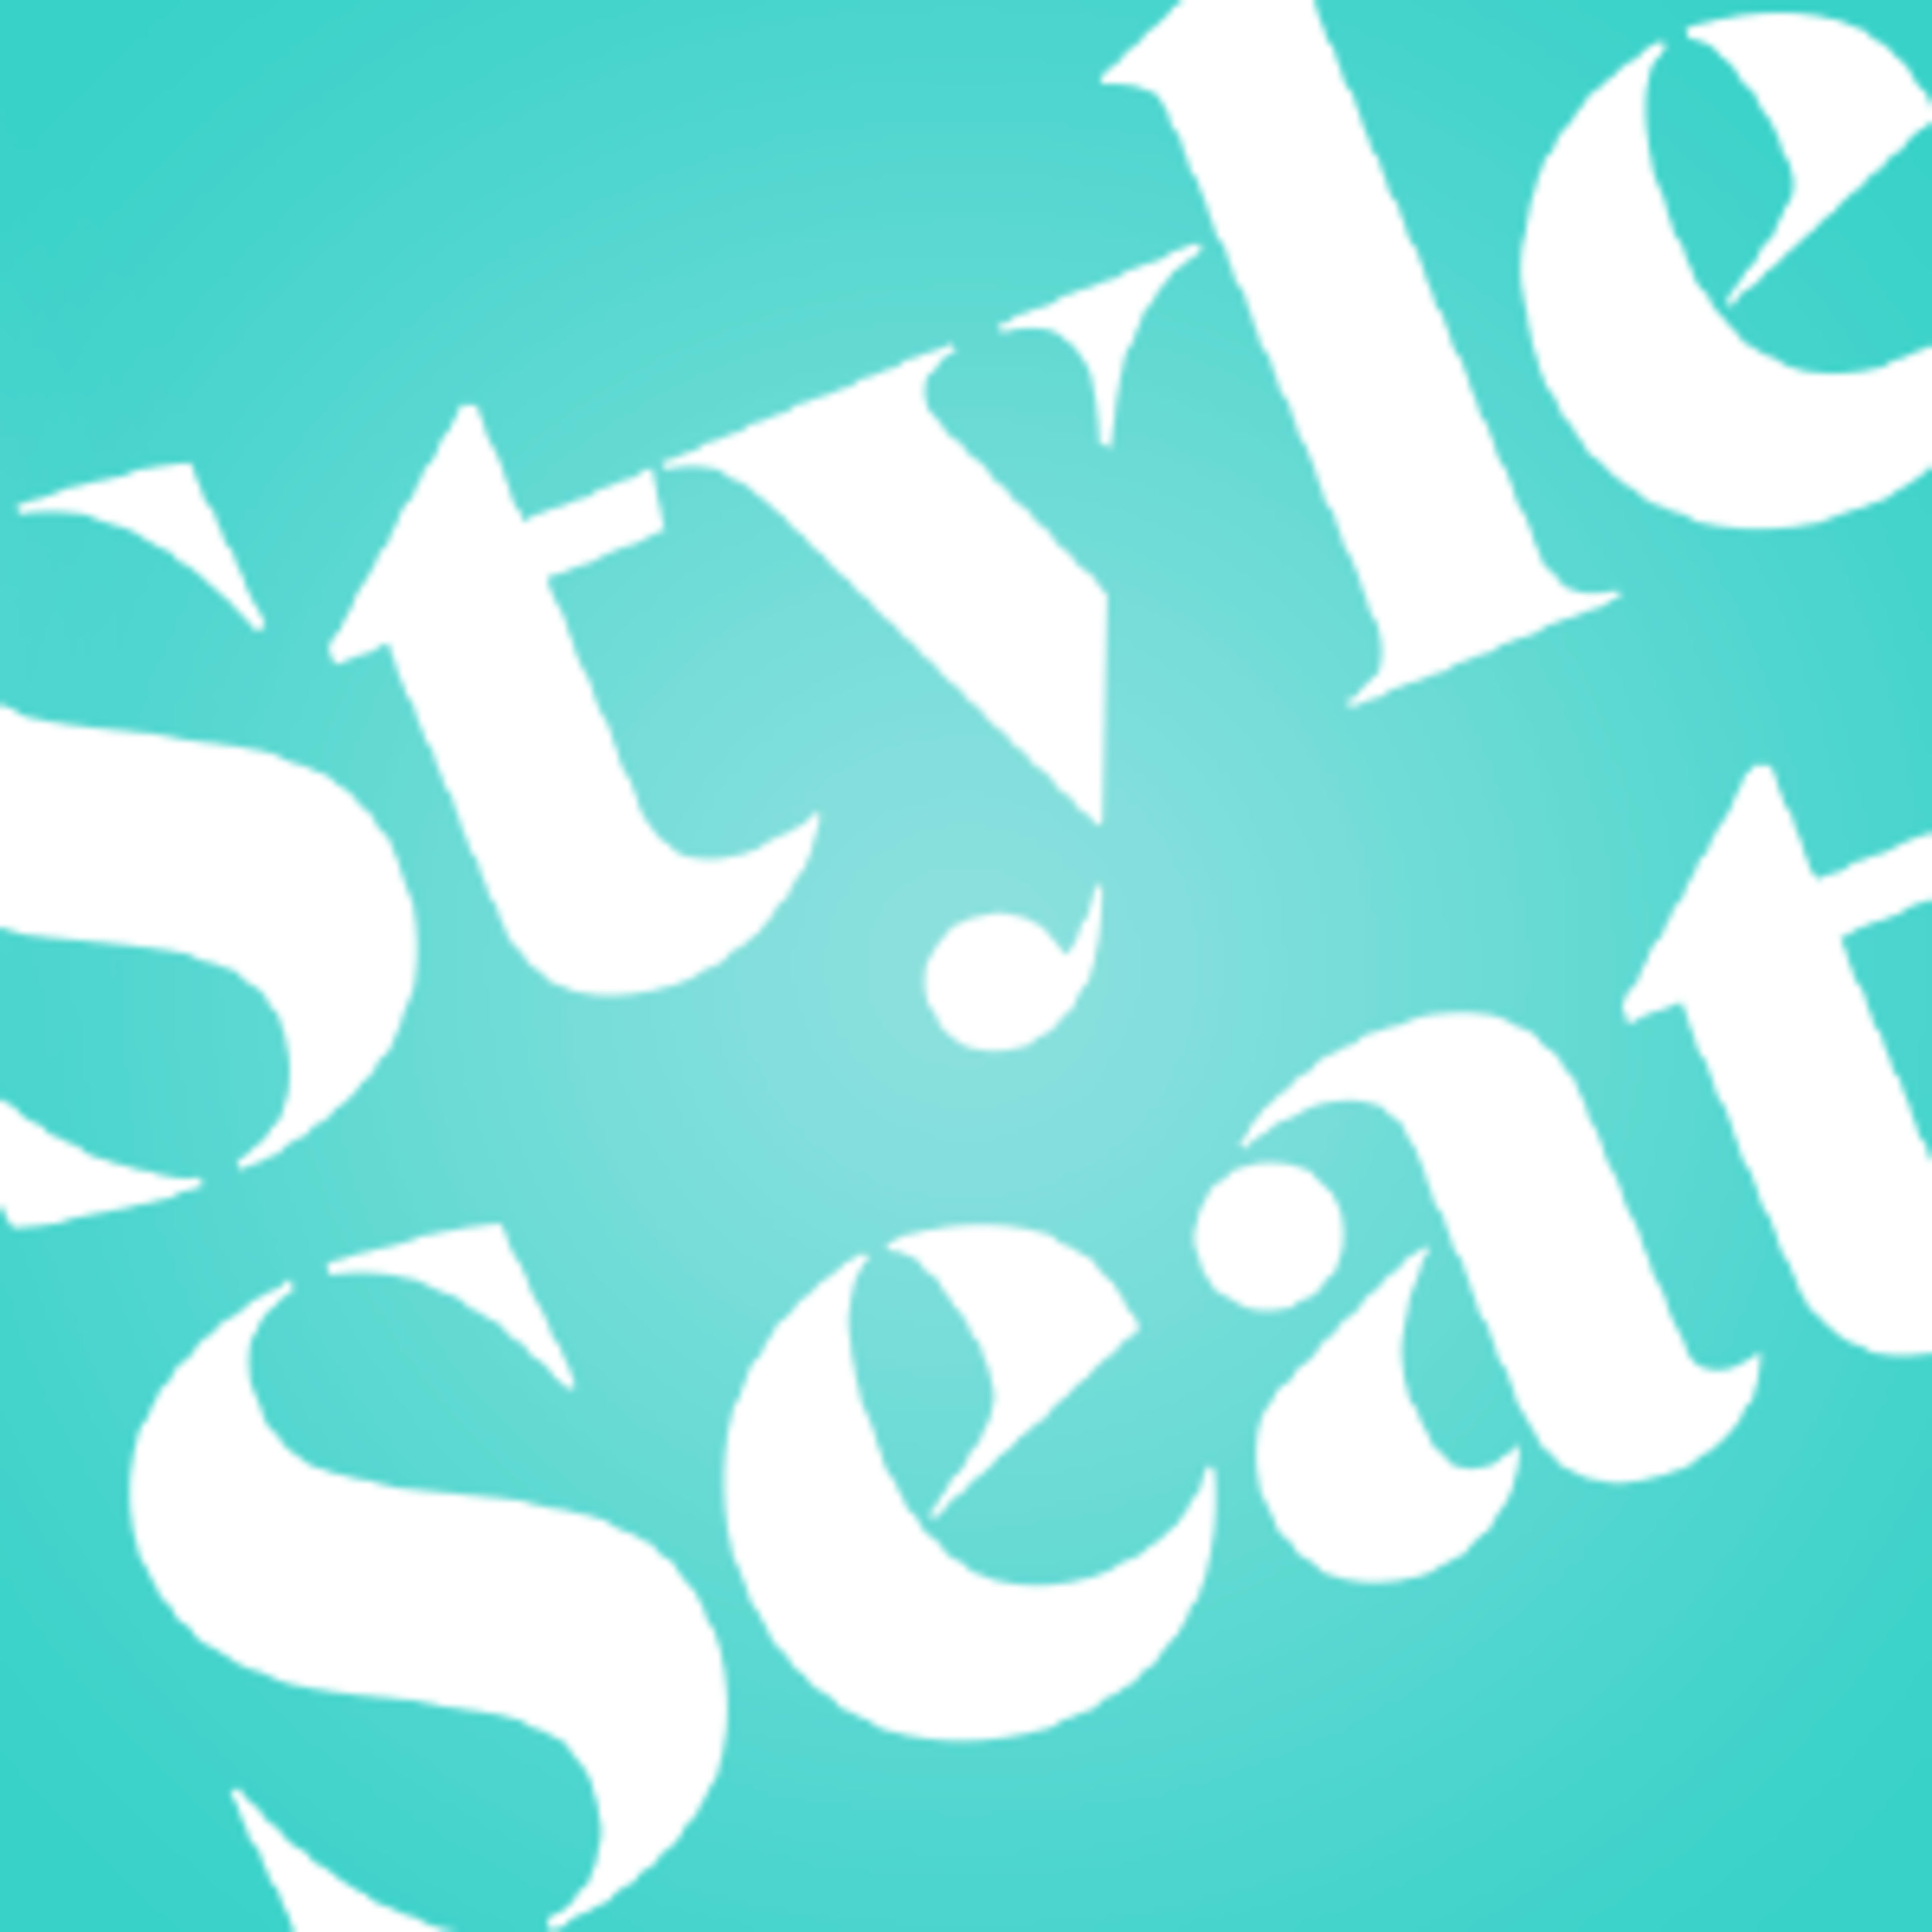 StyleSeatCode